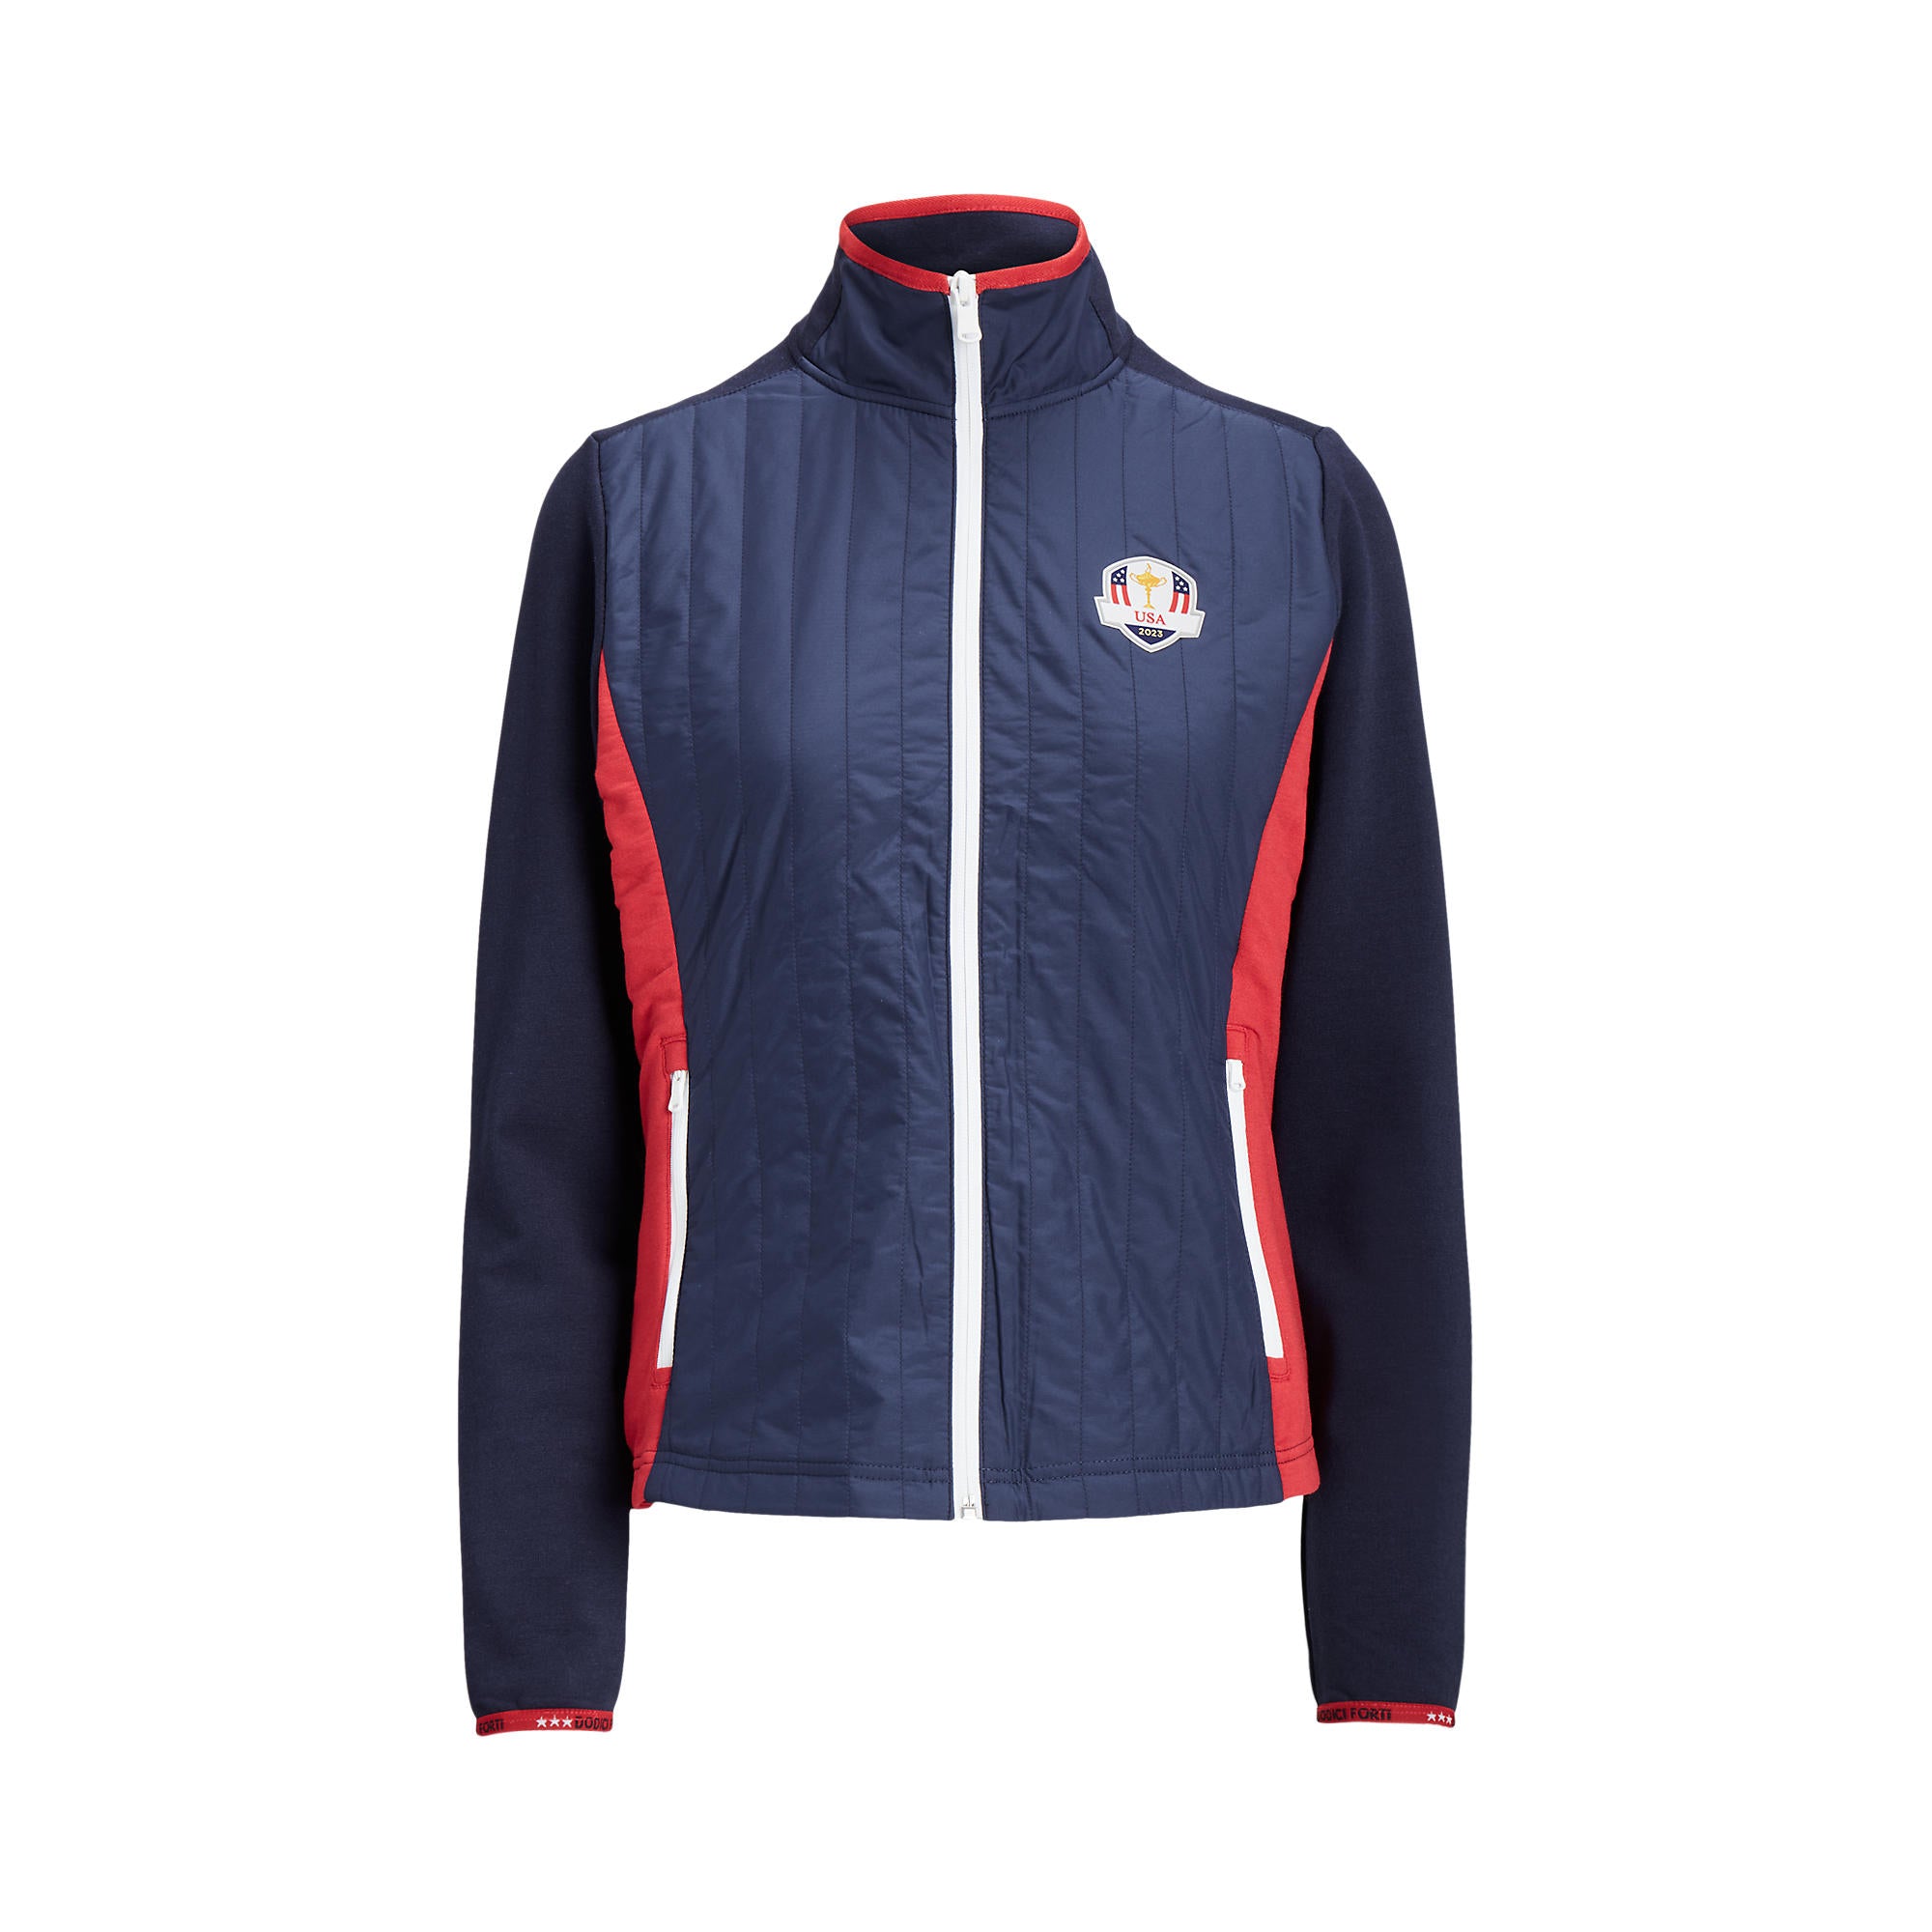 Ralph Lauren 2023 Ryder Cup Official Team Uniform Women's Full Zip Jacket - Front View